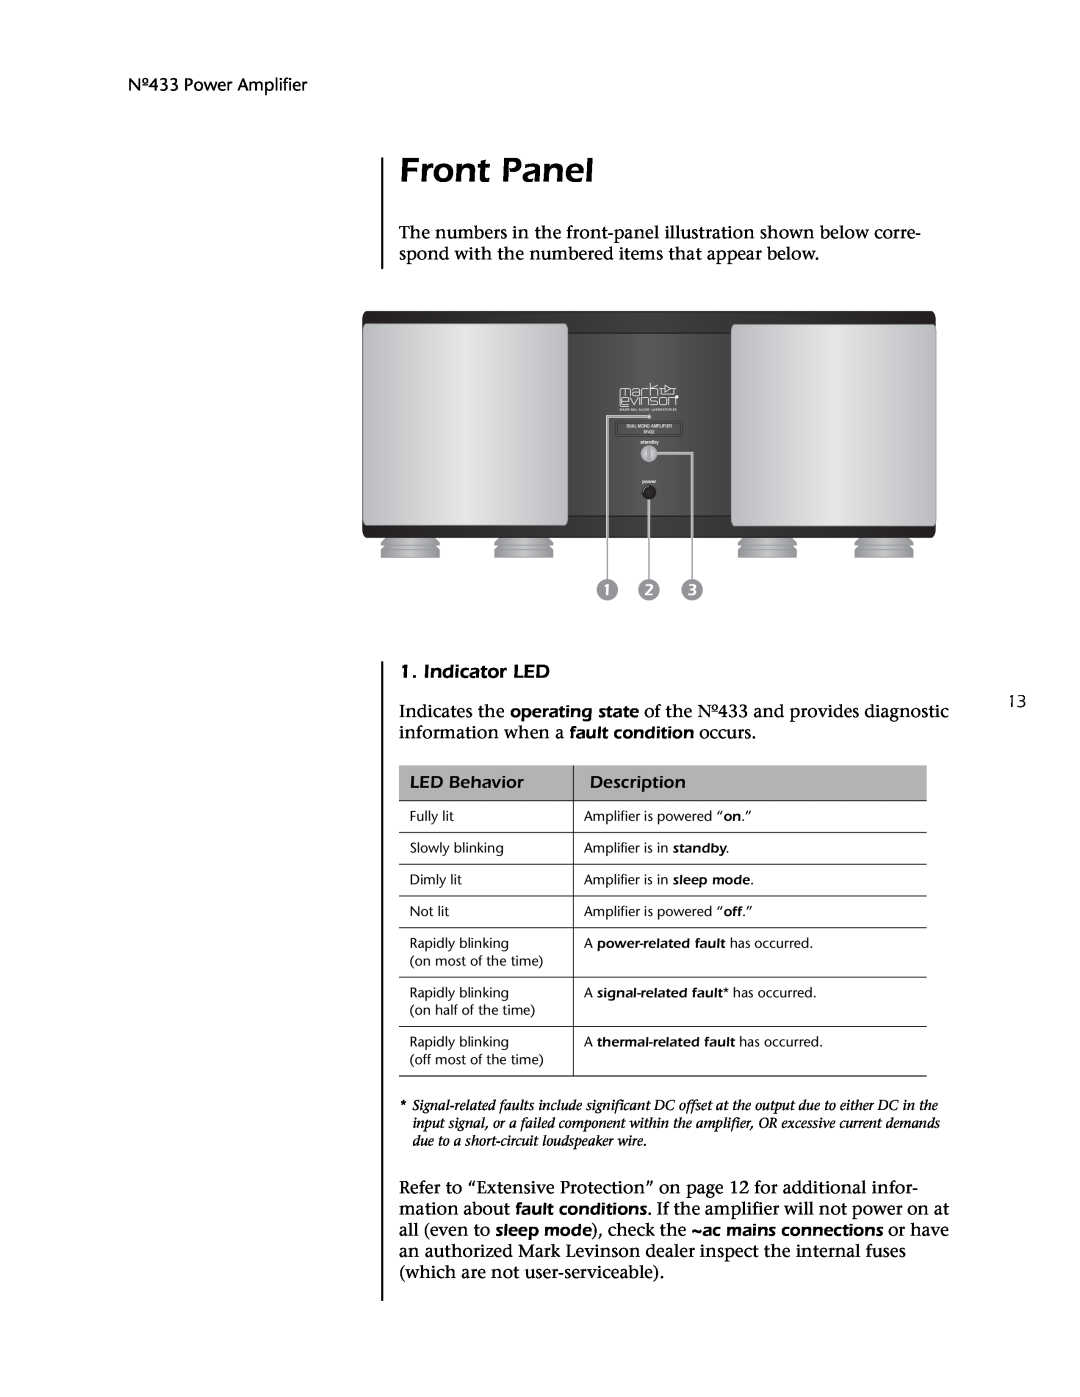 Mark Levinson 433 owner manual Front Panel, Indicator LED 